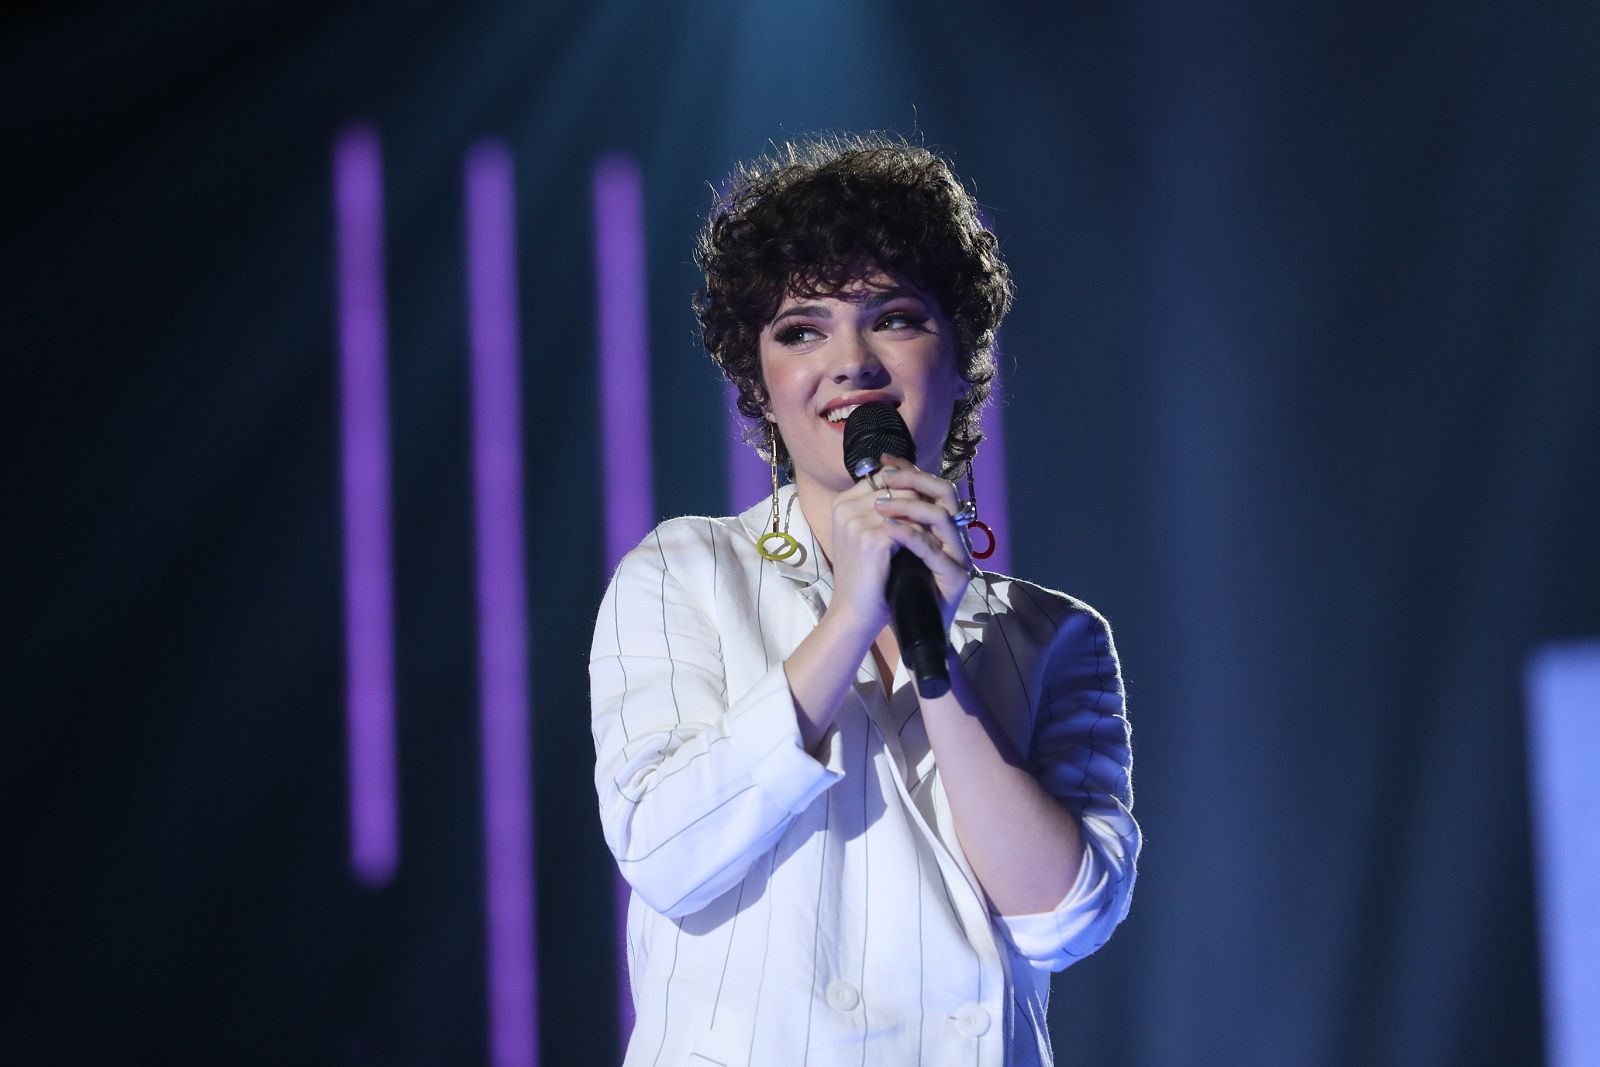 Anne Lukin canta "Salté" en la Gala 10 de Operación Triunfo 2020